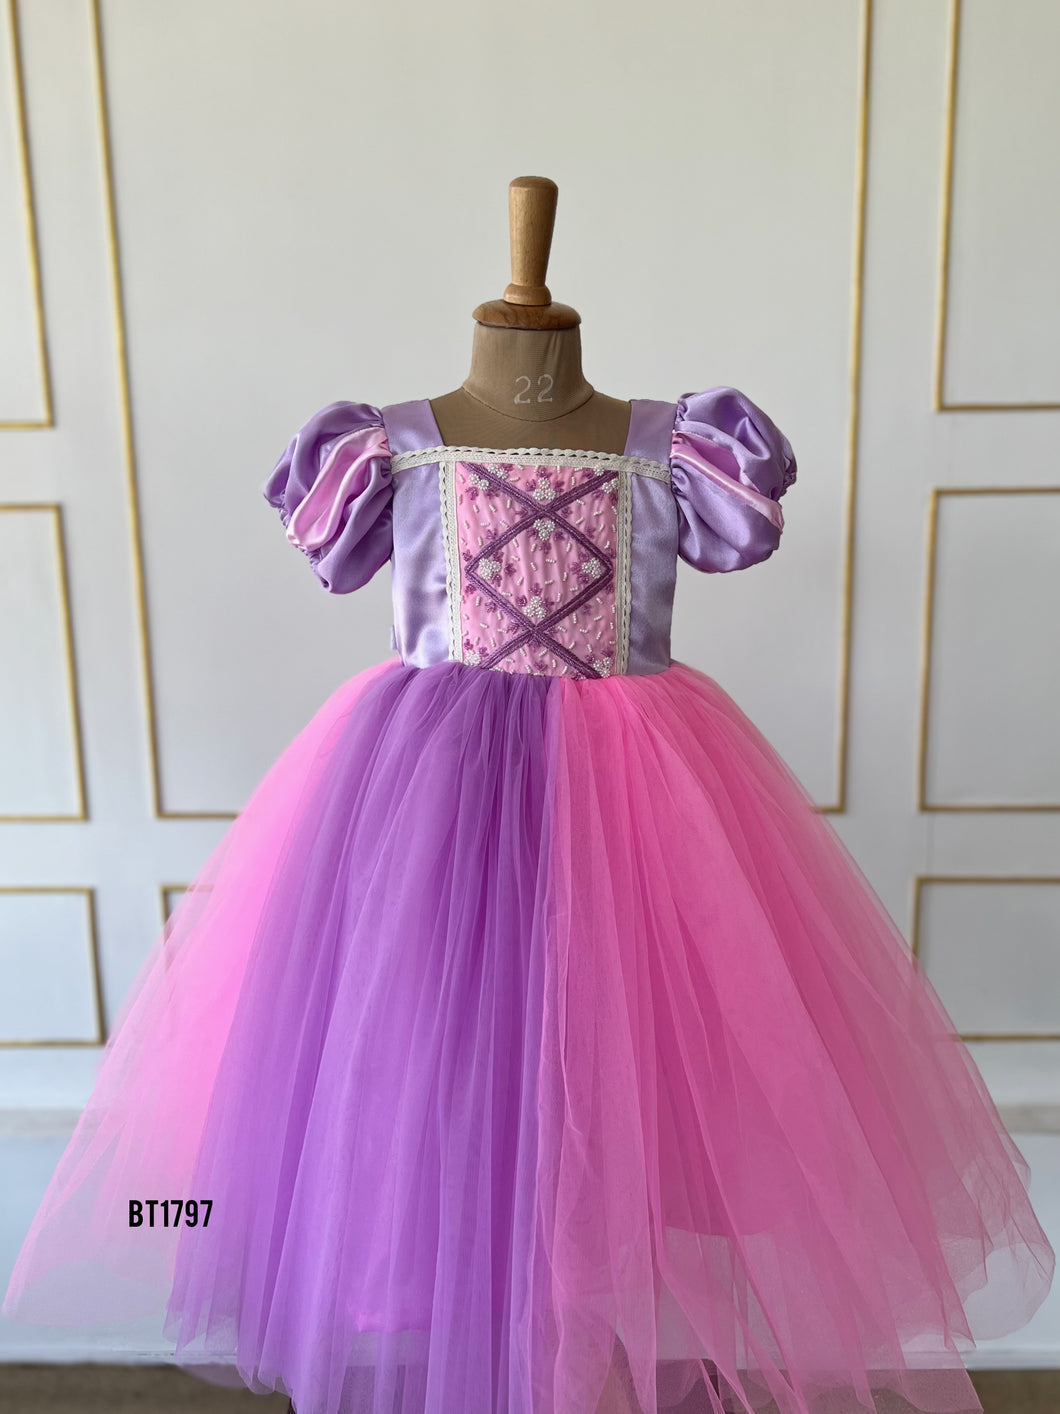 BT1797 Lilac Princess Enchantment Gown for Little Dreamers